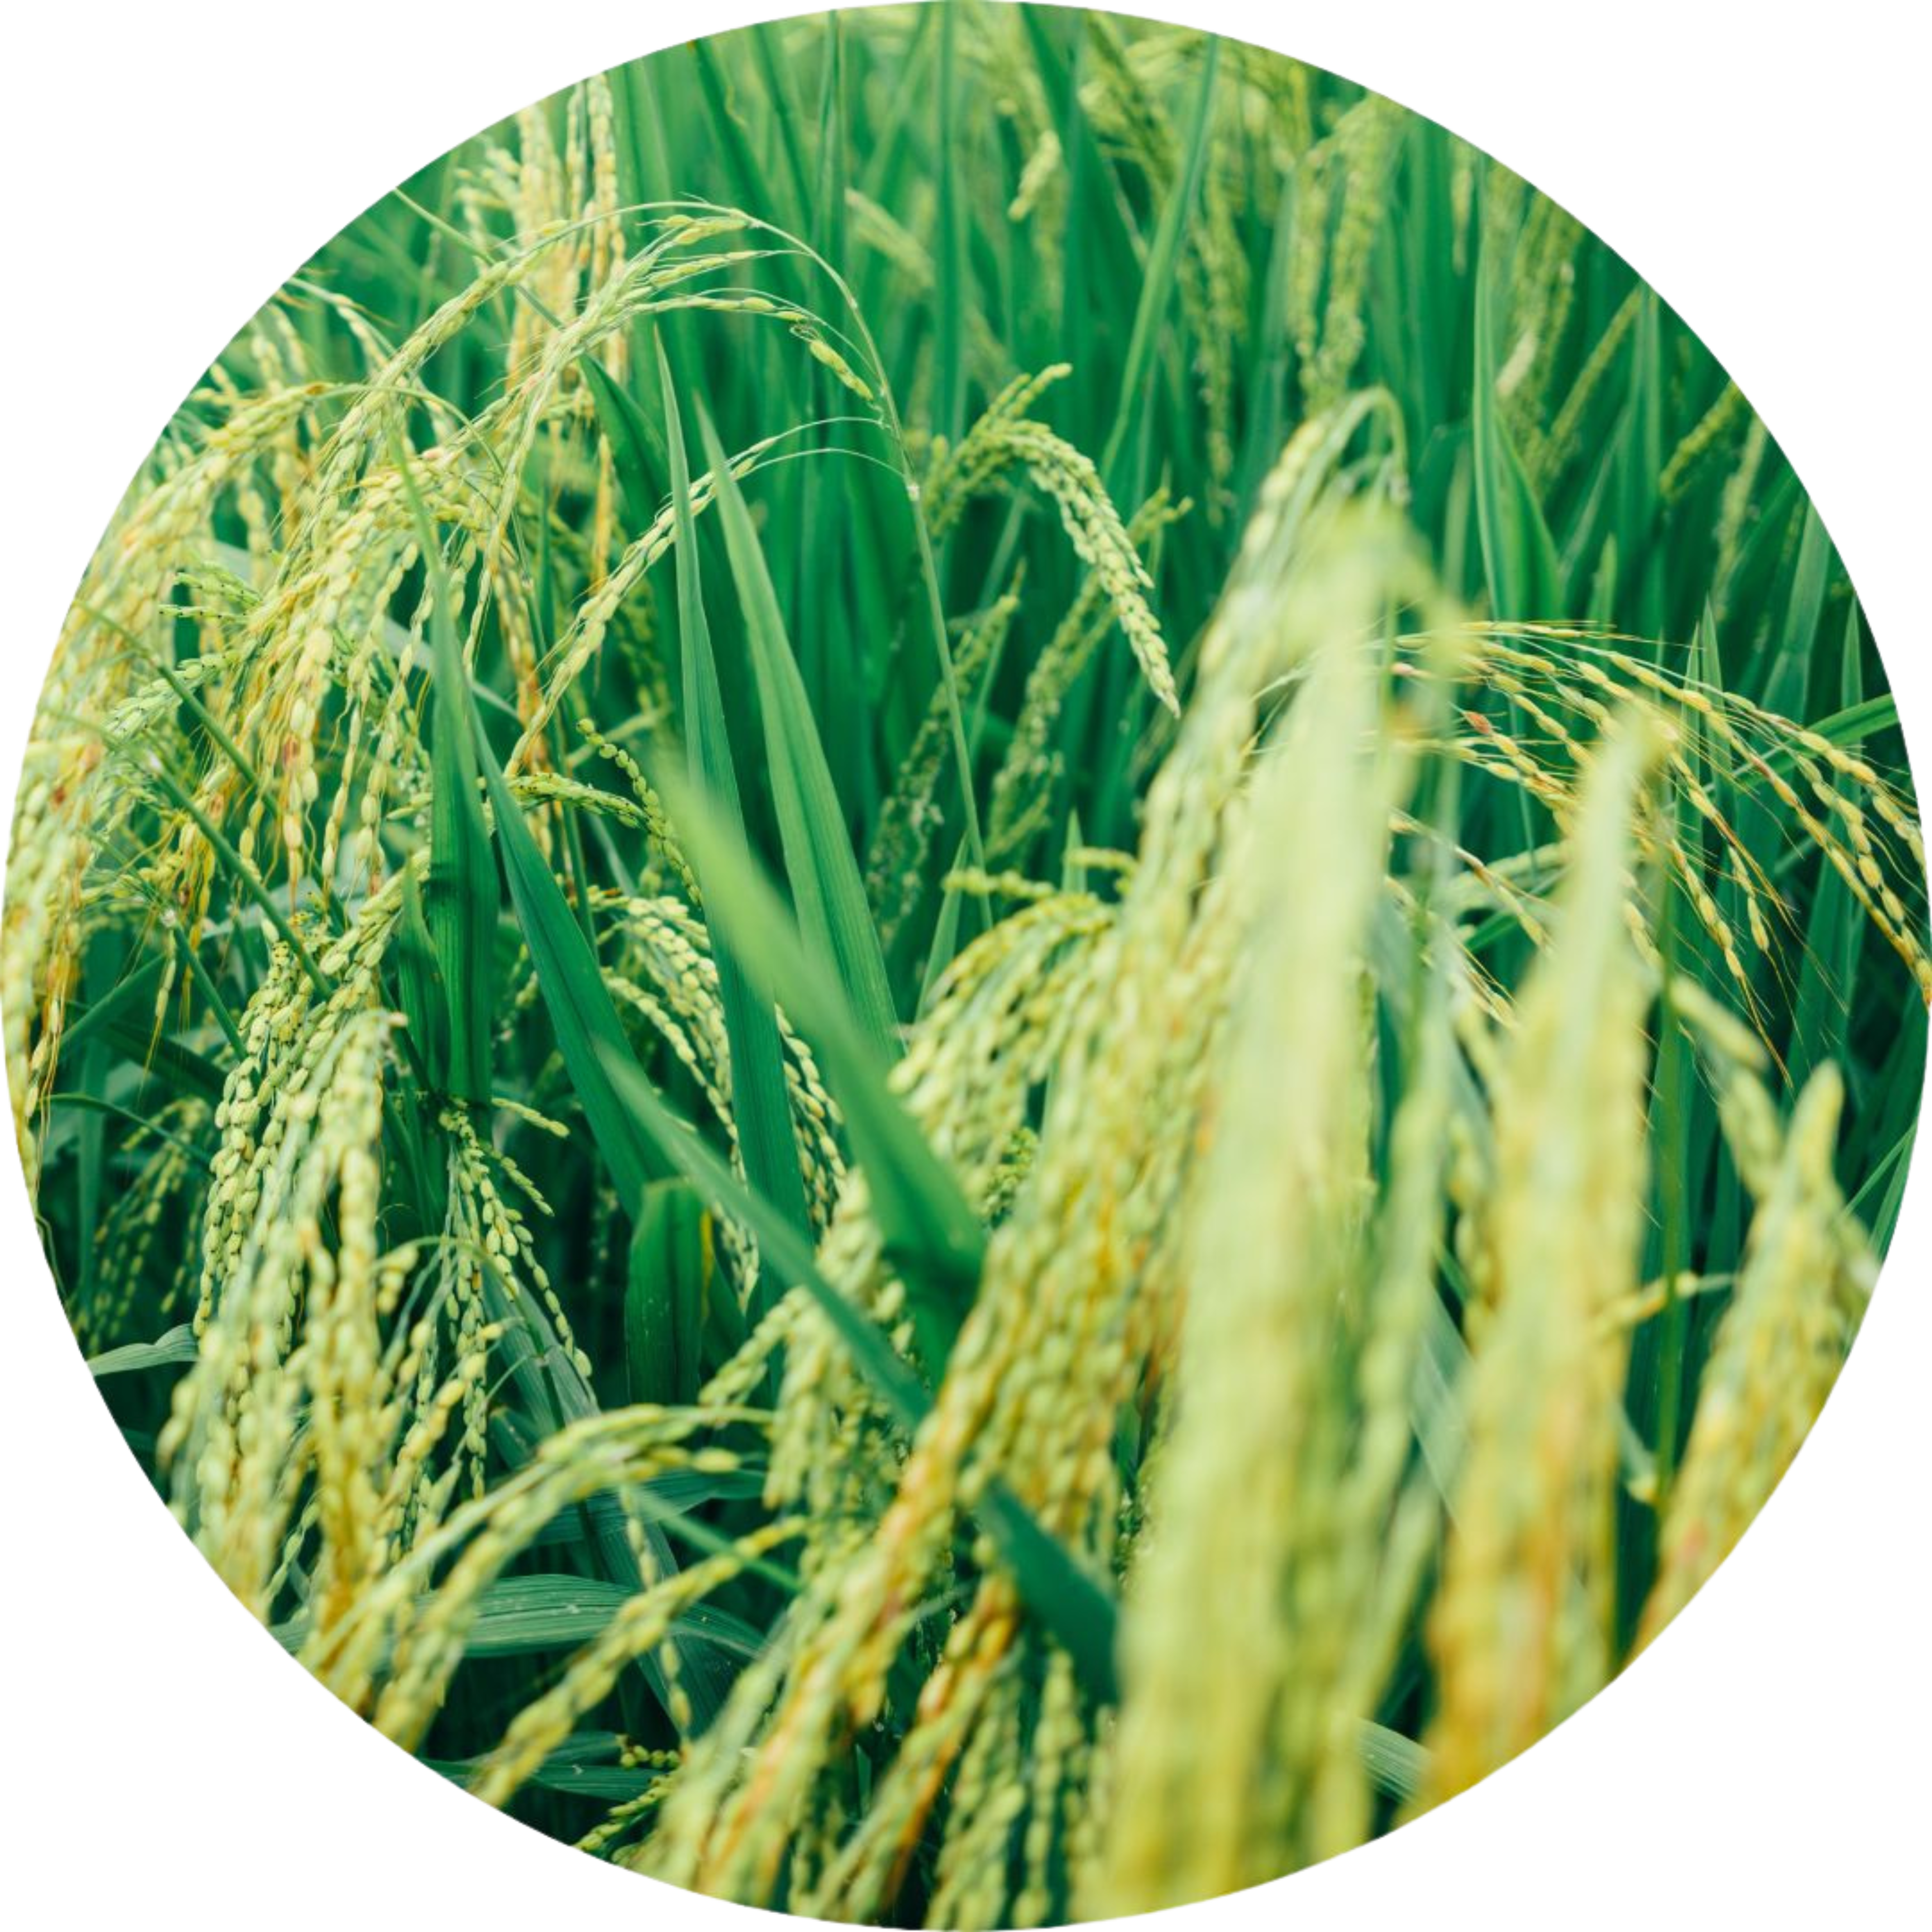 Rice crop growing